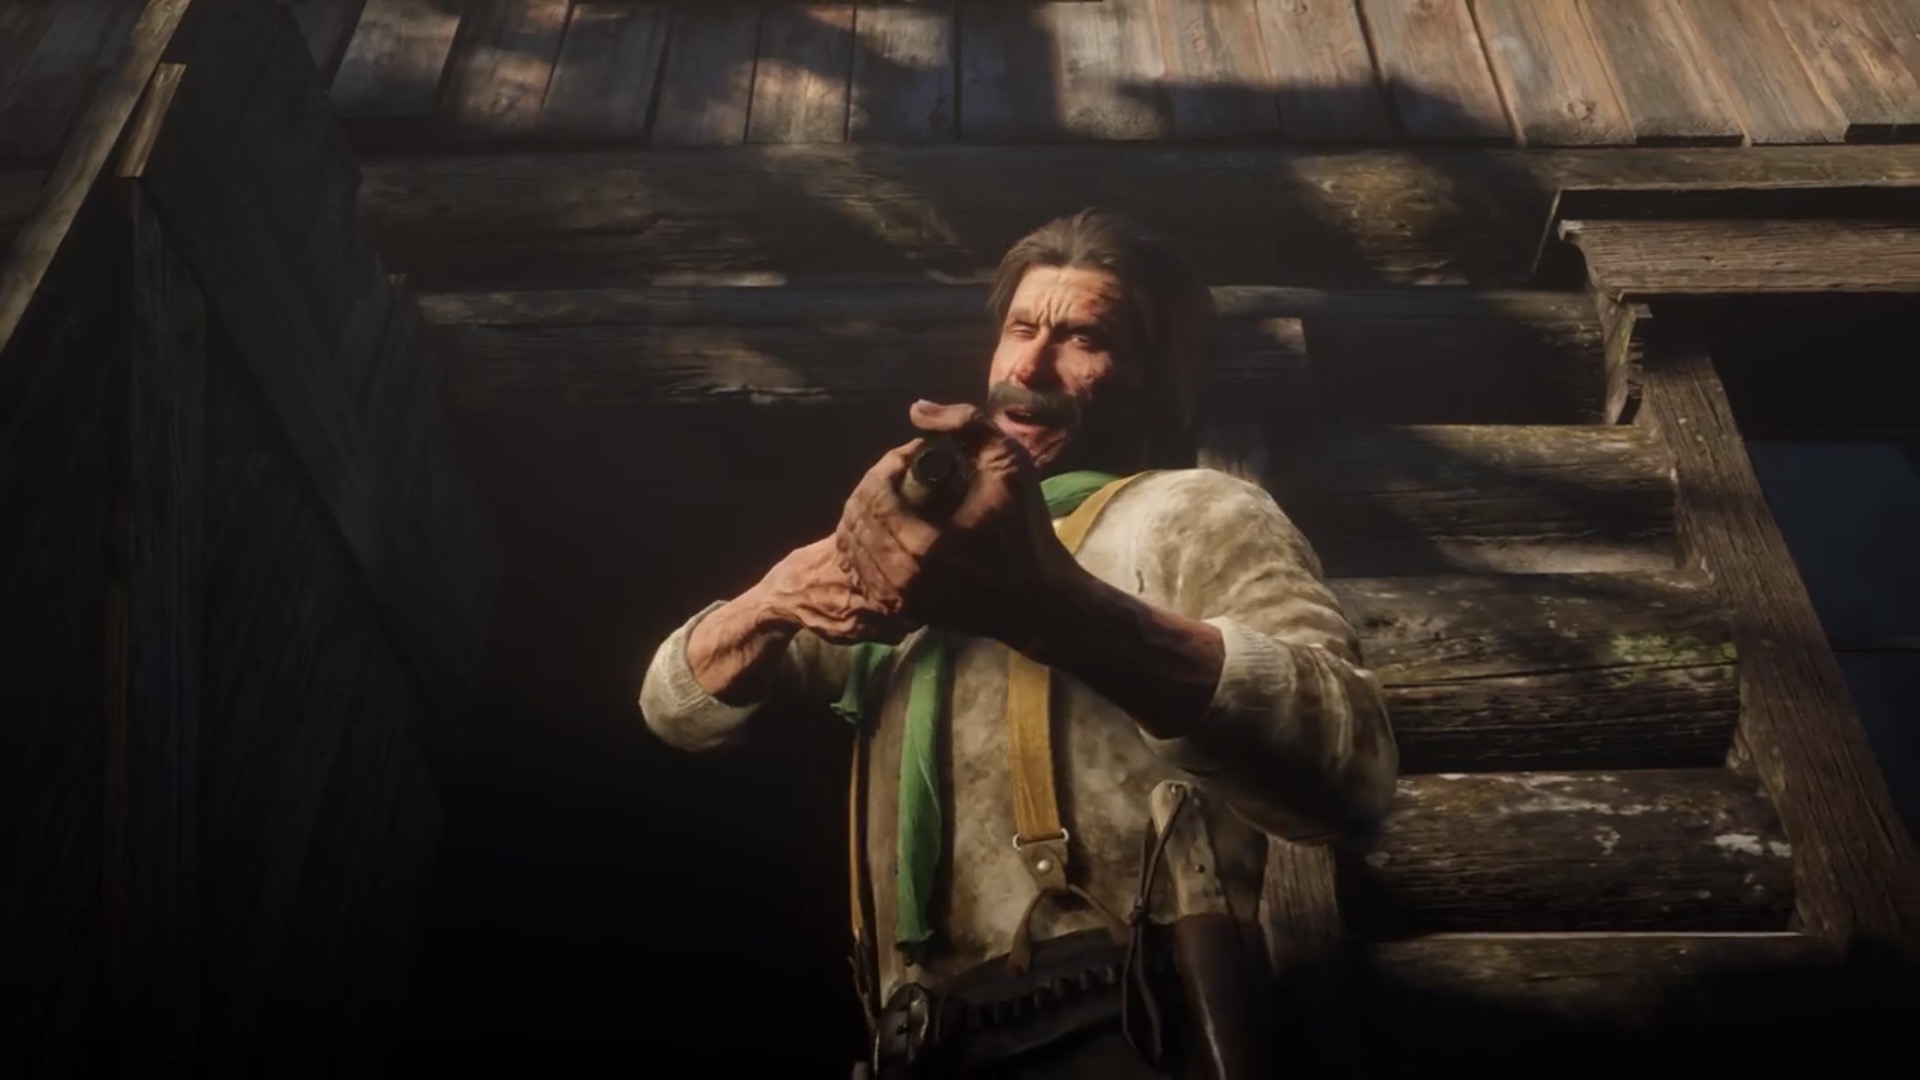 Red Dead Redemption 2 Gameplay Trailer Shocks With Wild West Violence